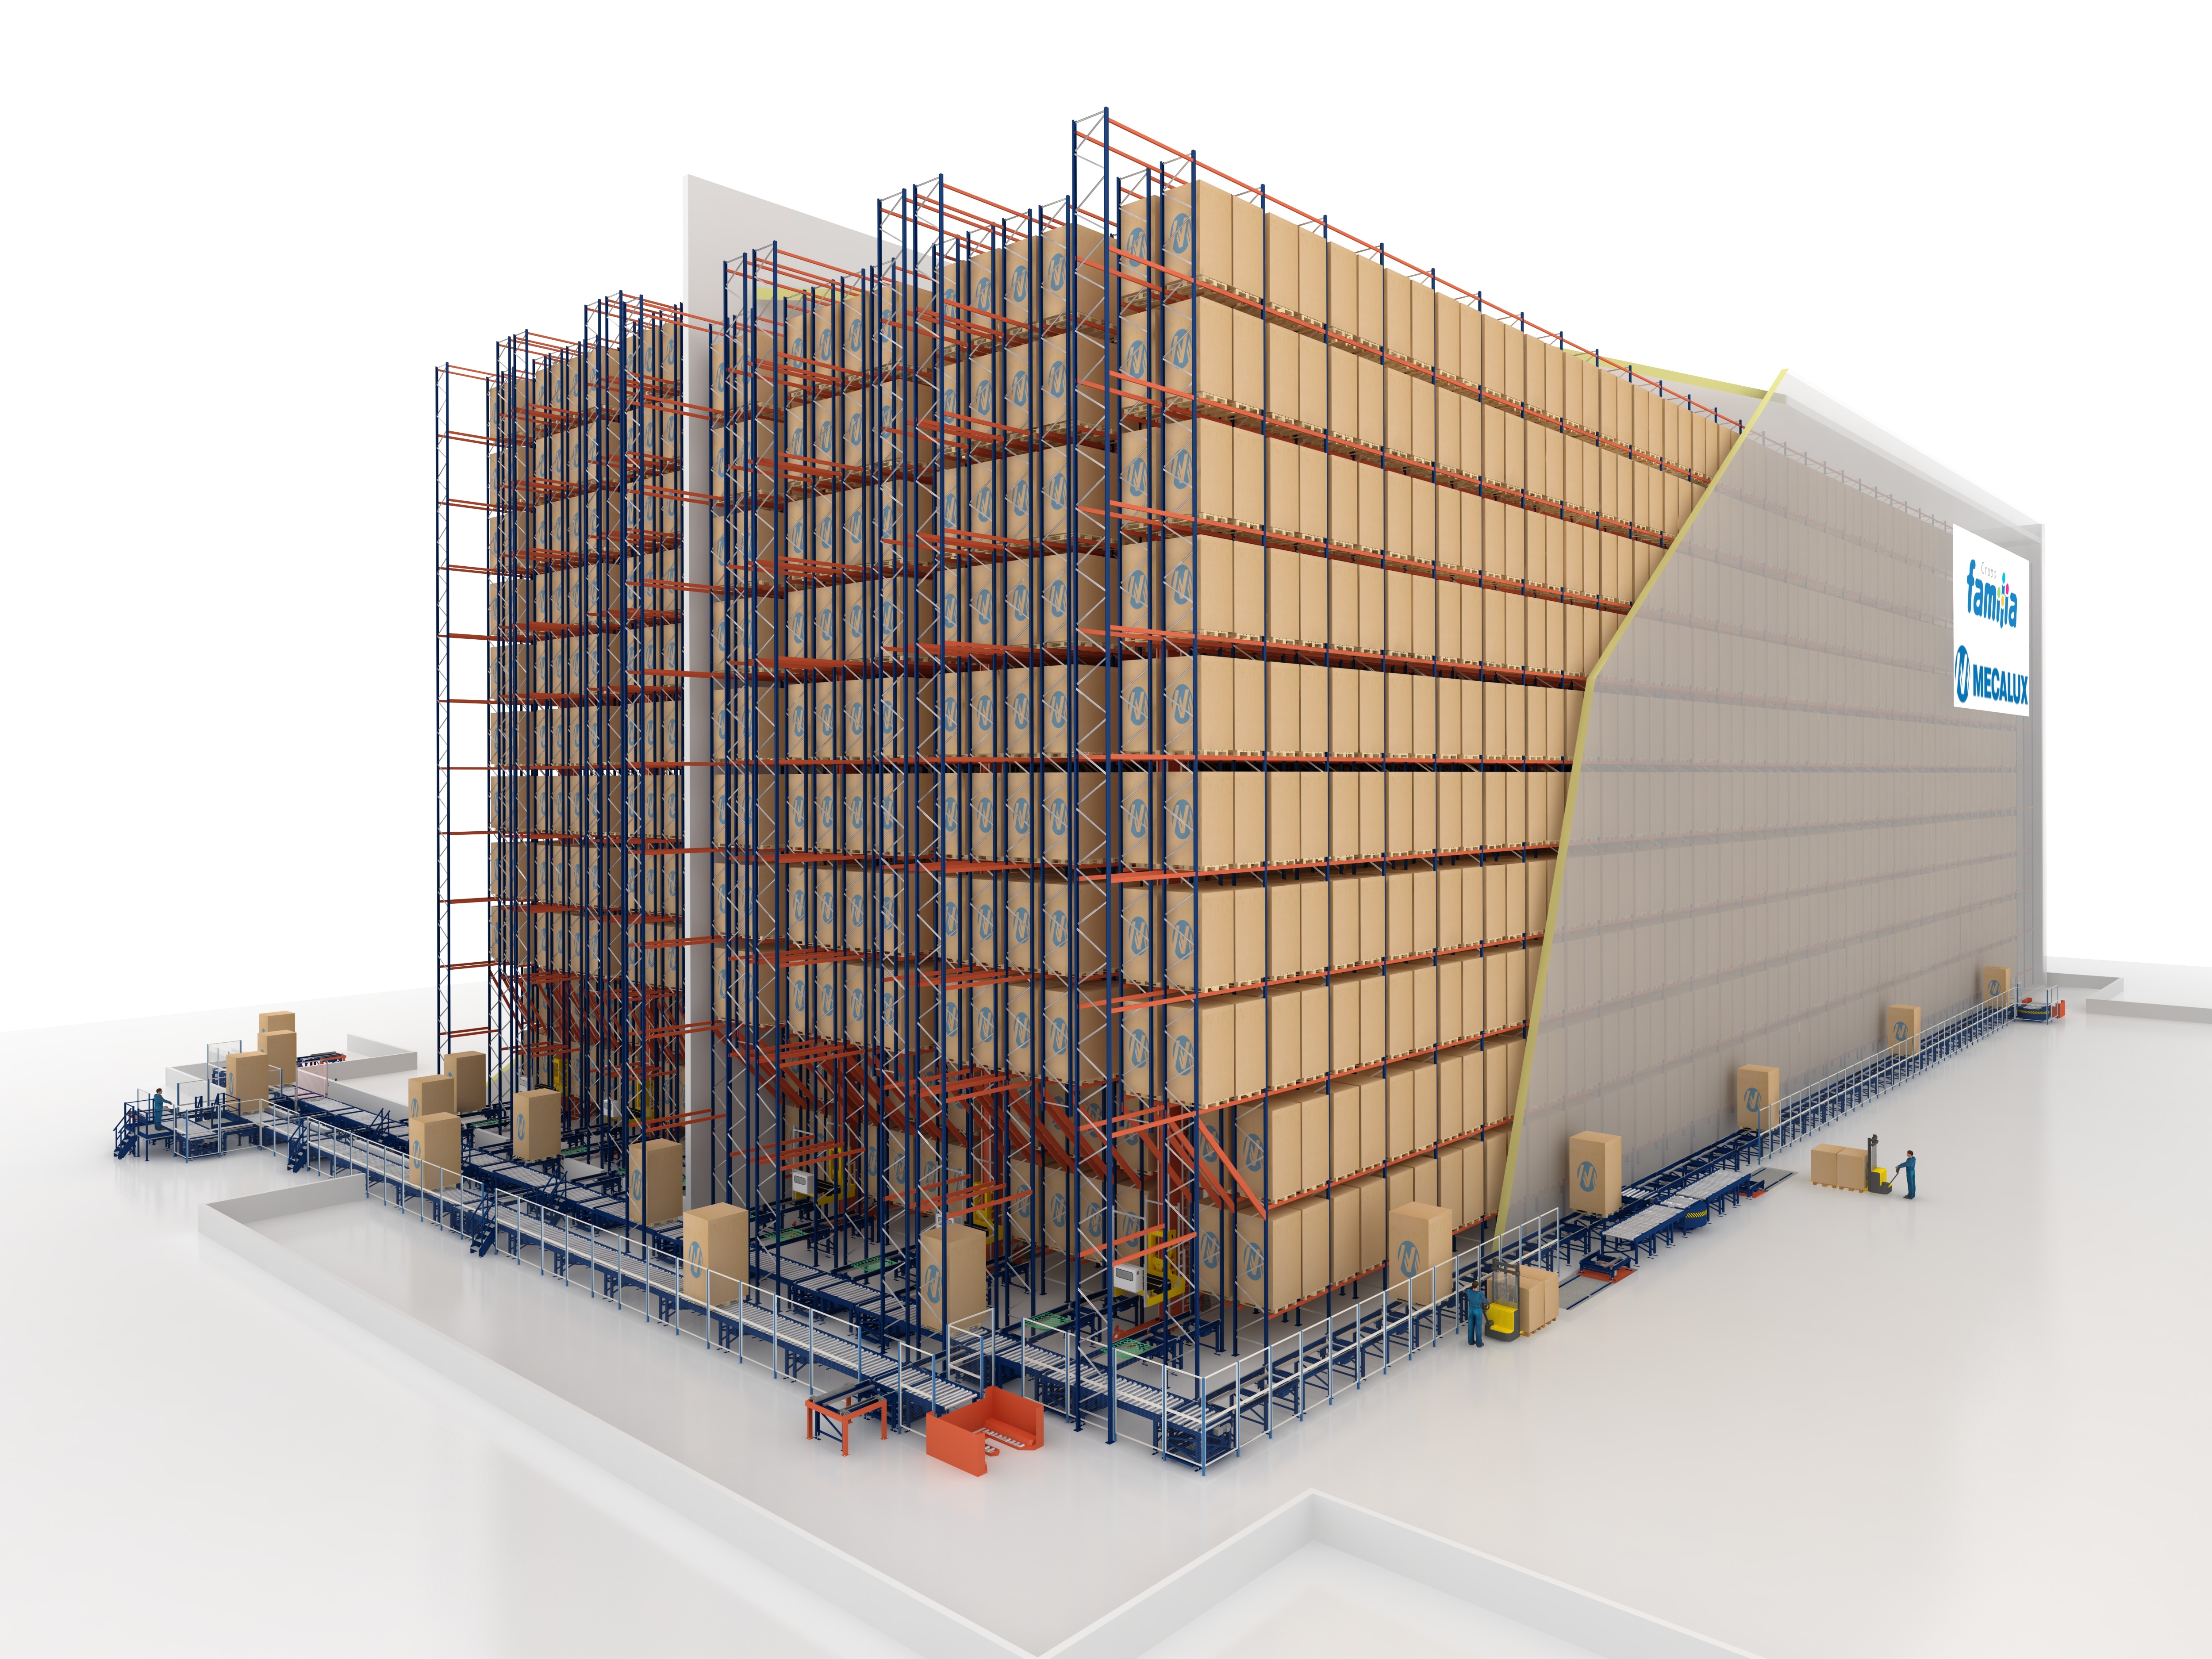 The Grupo Familia warehouse has a capacity to accommodate 19,000 pallets